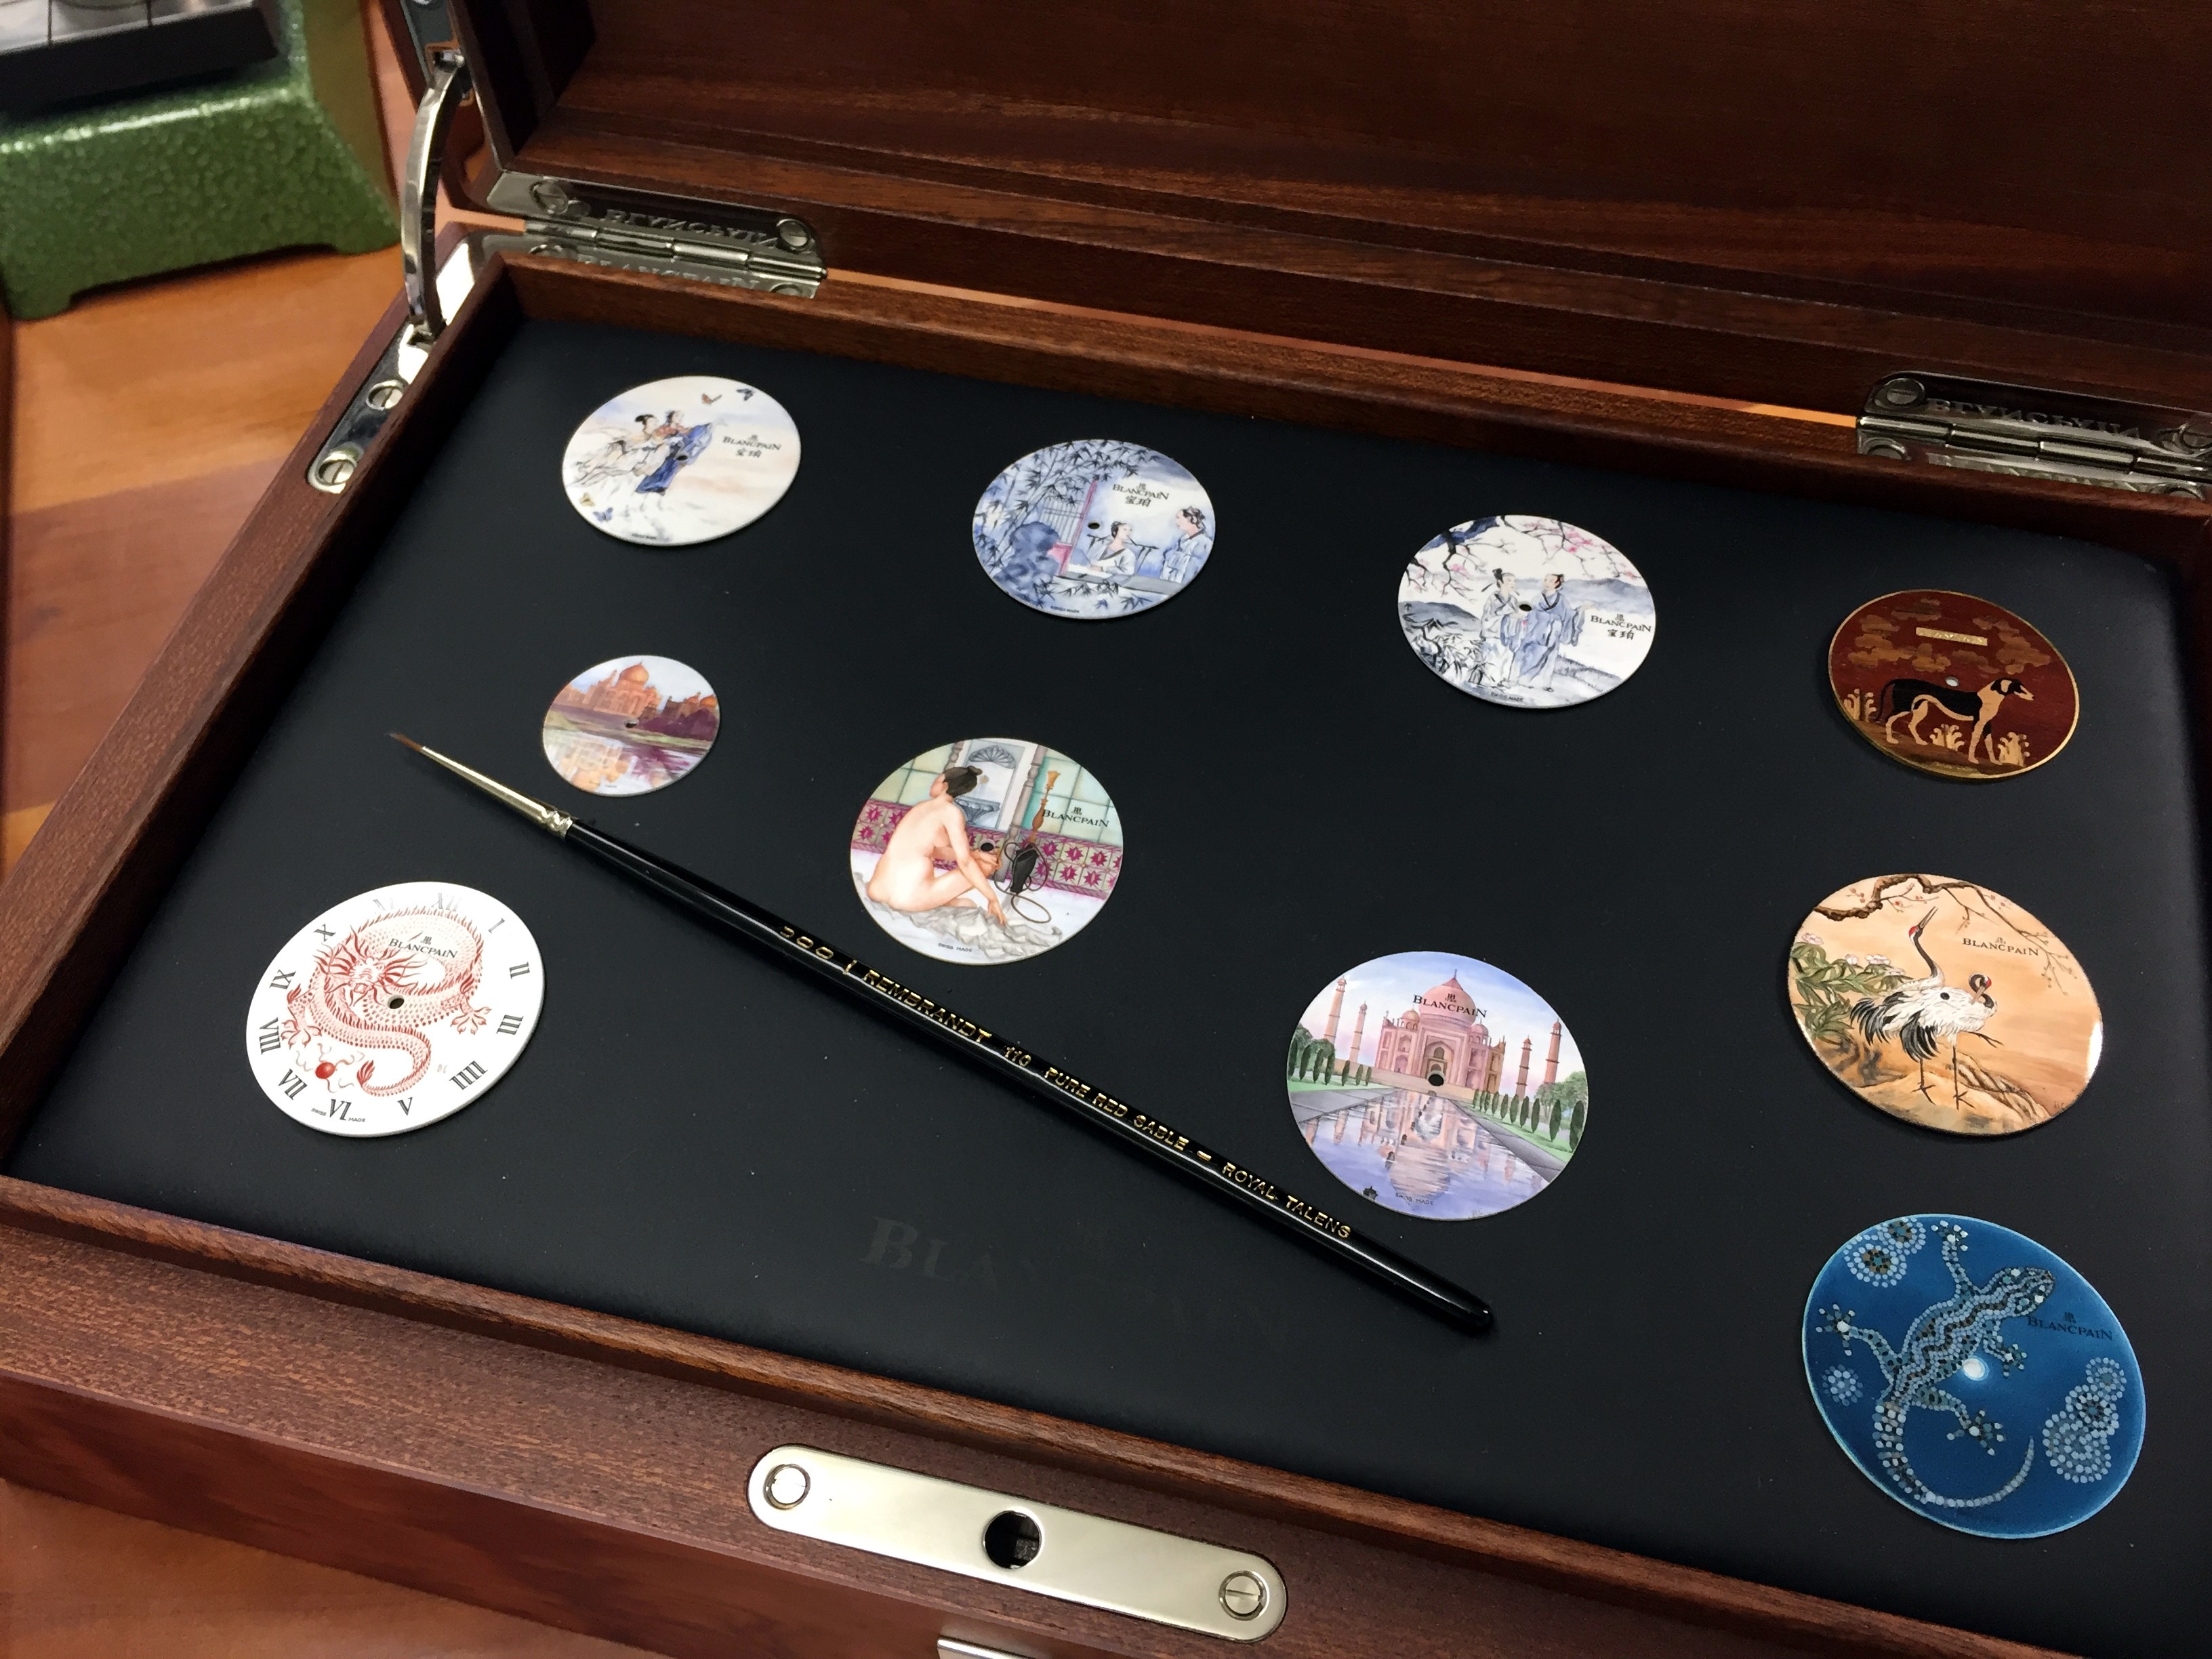 Blancpain enamel dials in a presentation box showcasing the miniature painting enamelling technique